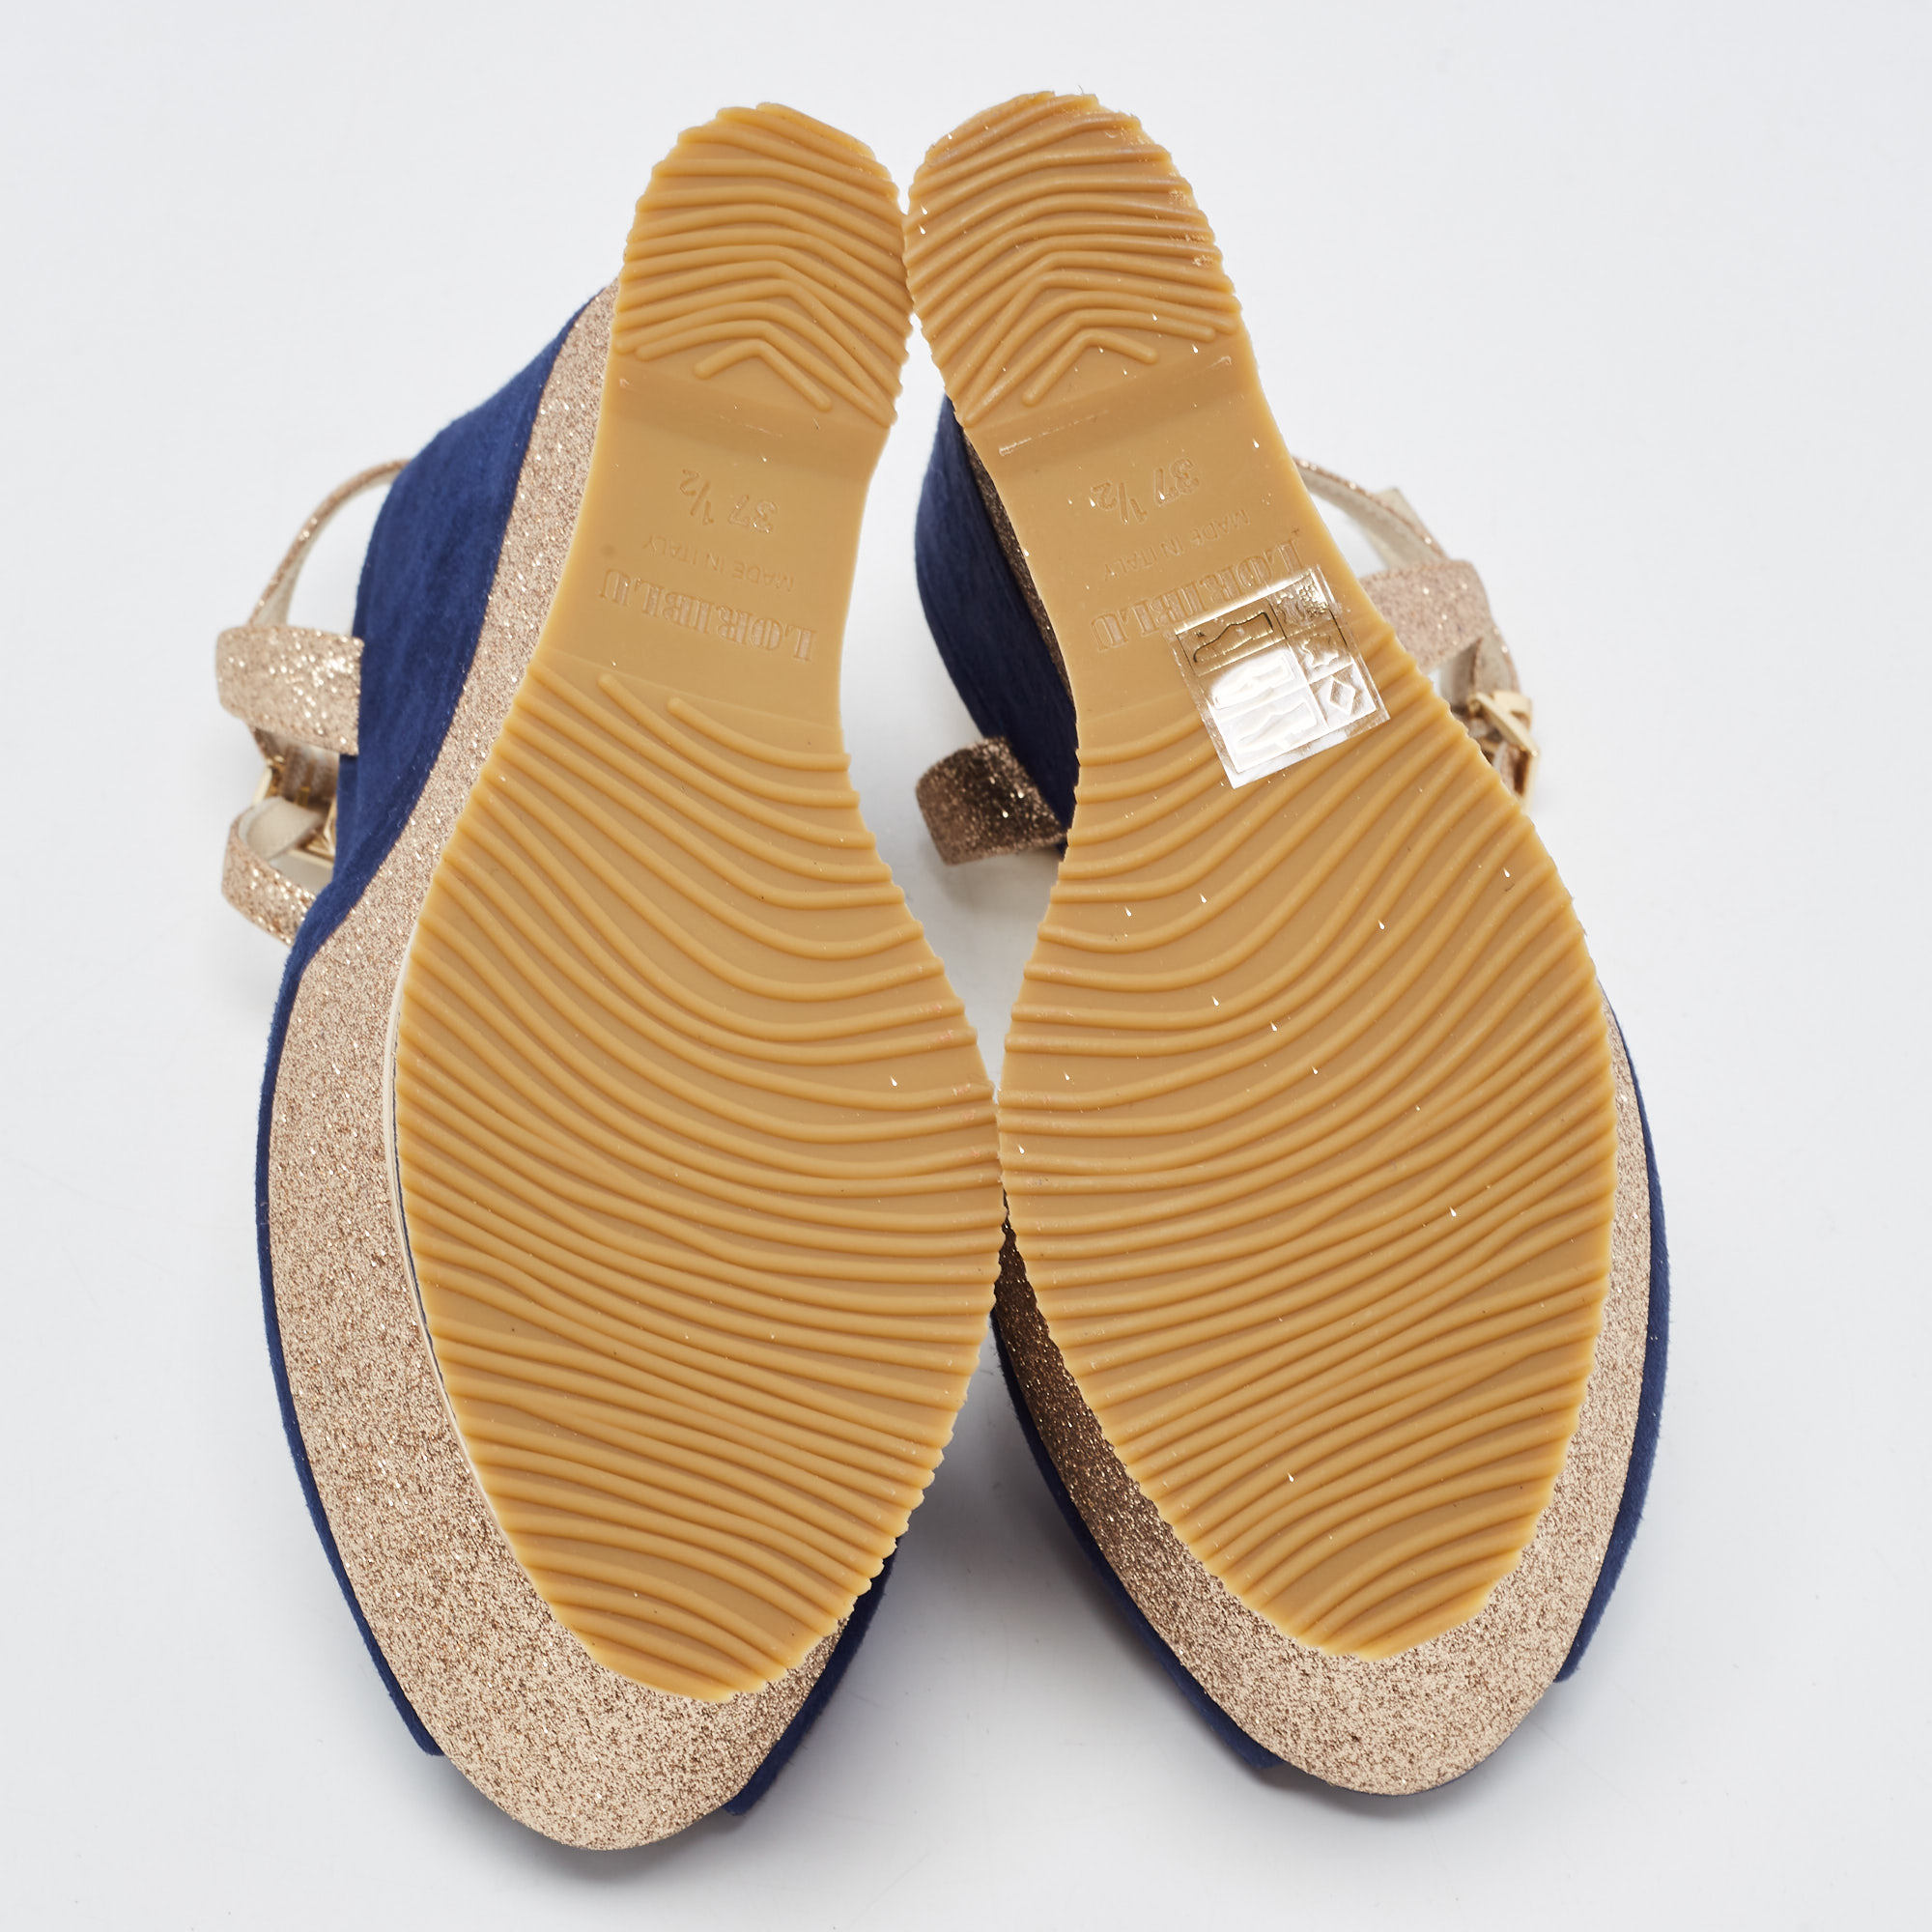 Loriblu Navy Blue /Gold Suede And Glitter Wedge Platform Ankle Strap Sandals Size 37.5